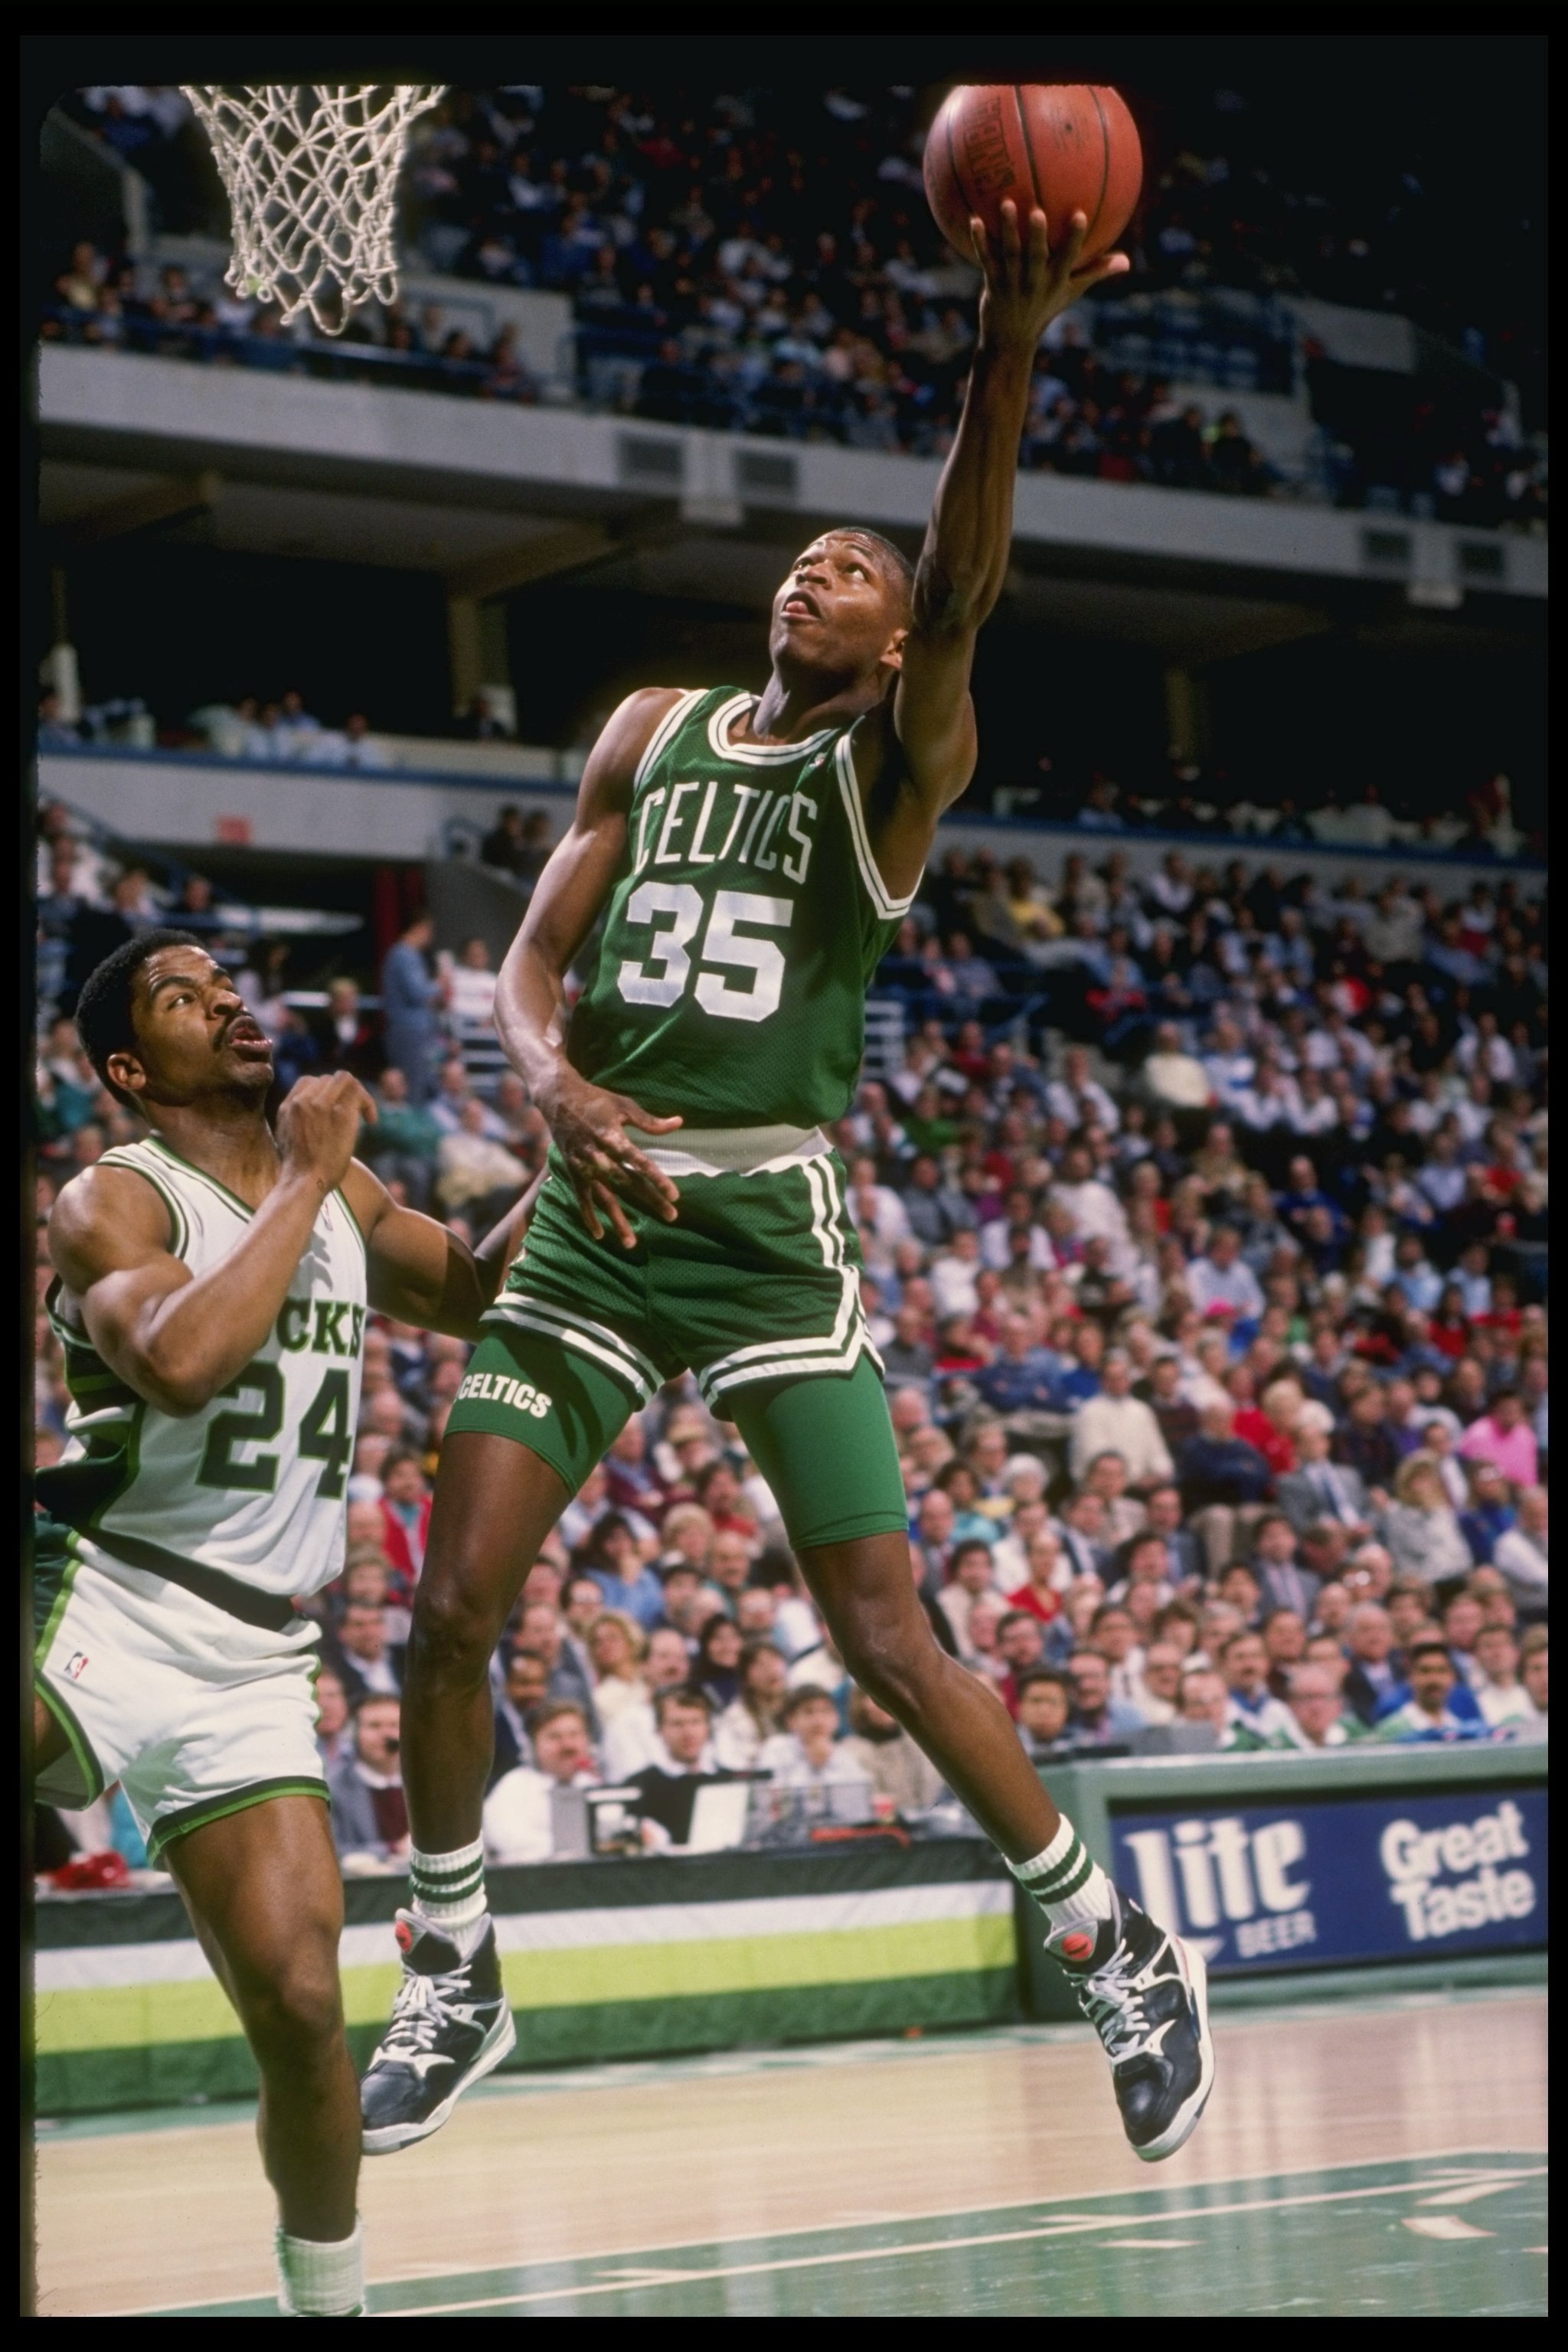 Boston Celtics guard Reggie Lewis tragically passed away twenty